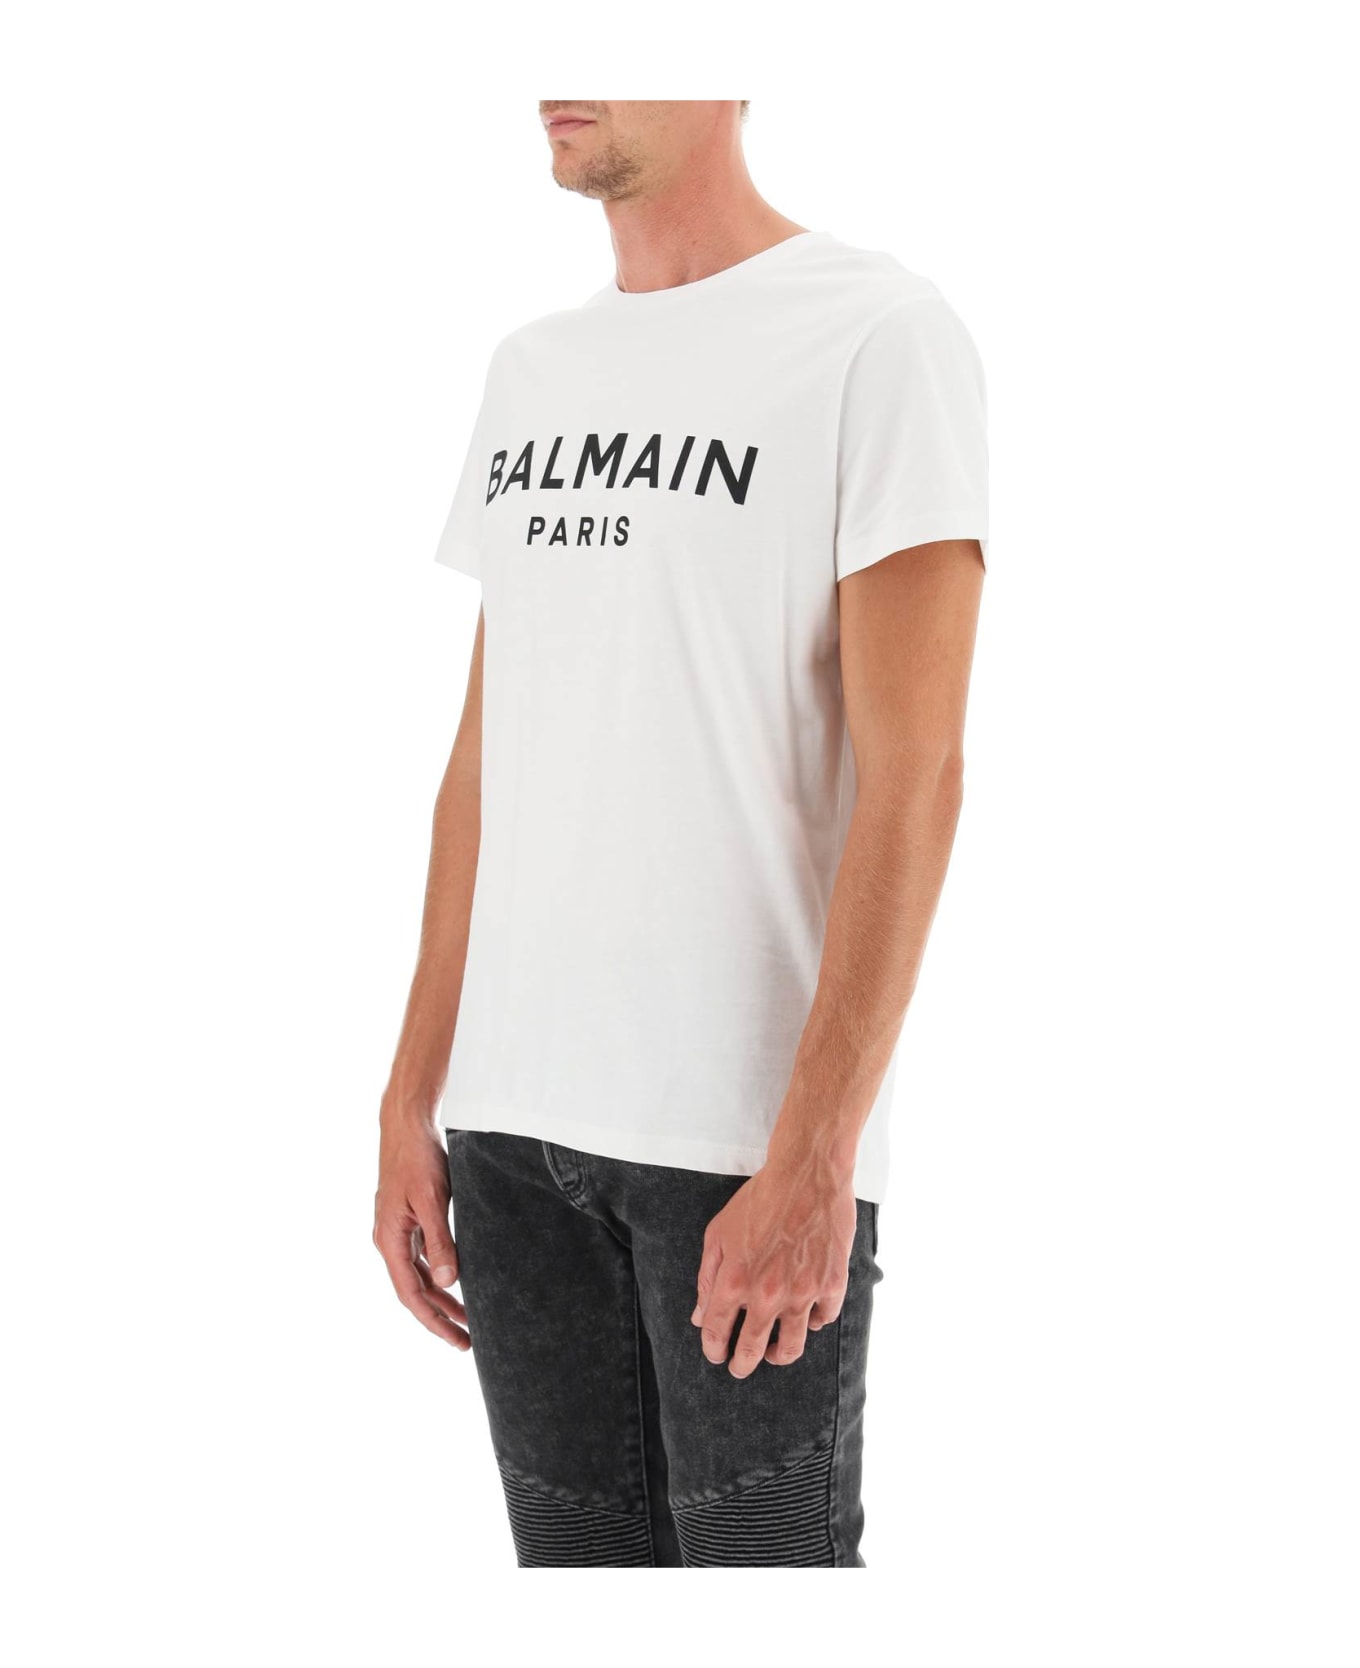 Balmain Logo Print T-shirt - BLANC/NOIR